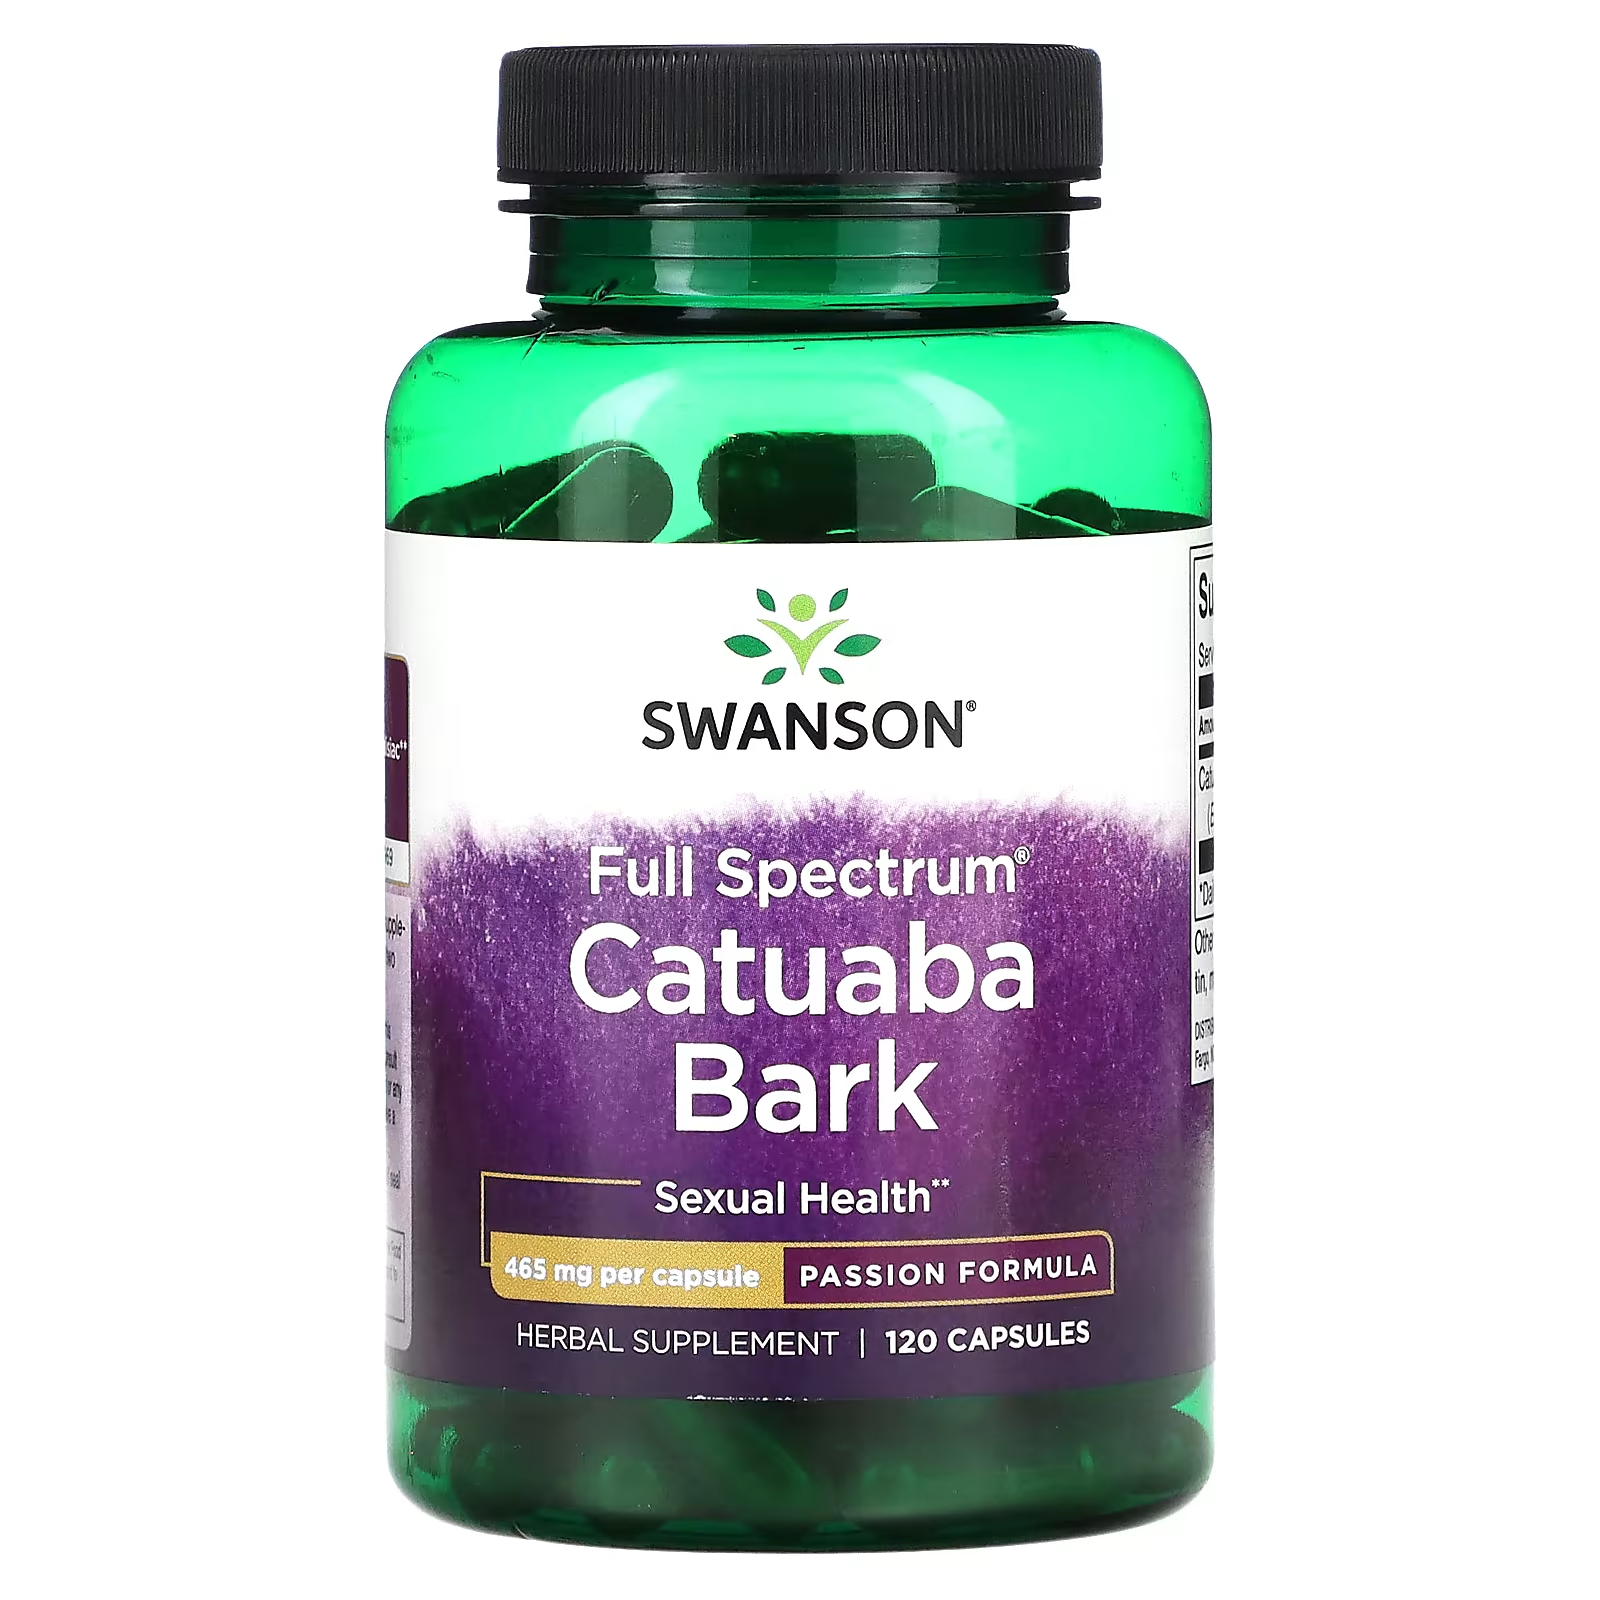 Растительная добавка Swanson Full Spectrum Catuaba Bark 465 мг, 120 капсул swanson full spectrum кора катуабы 465 мг 120 капсул